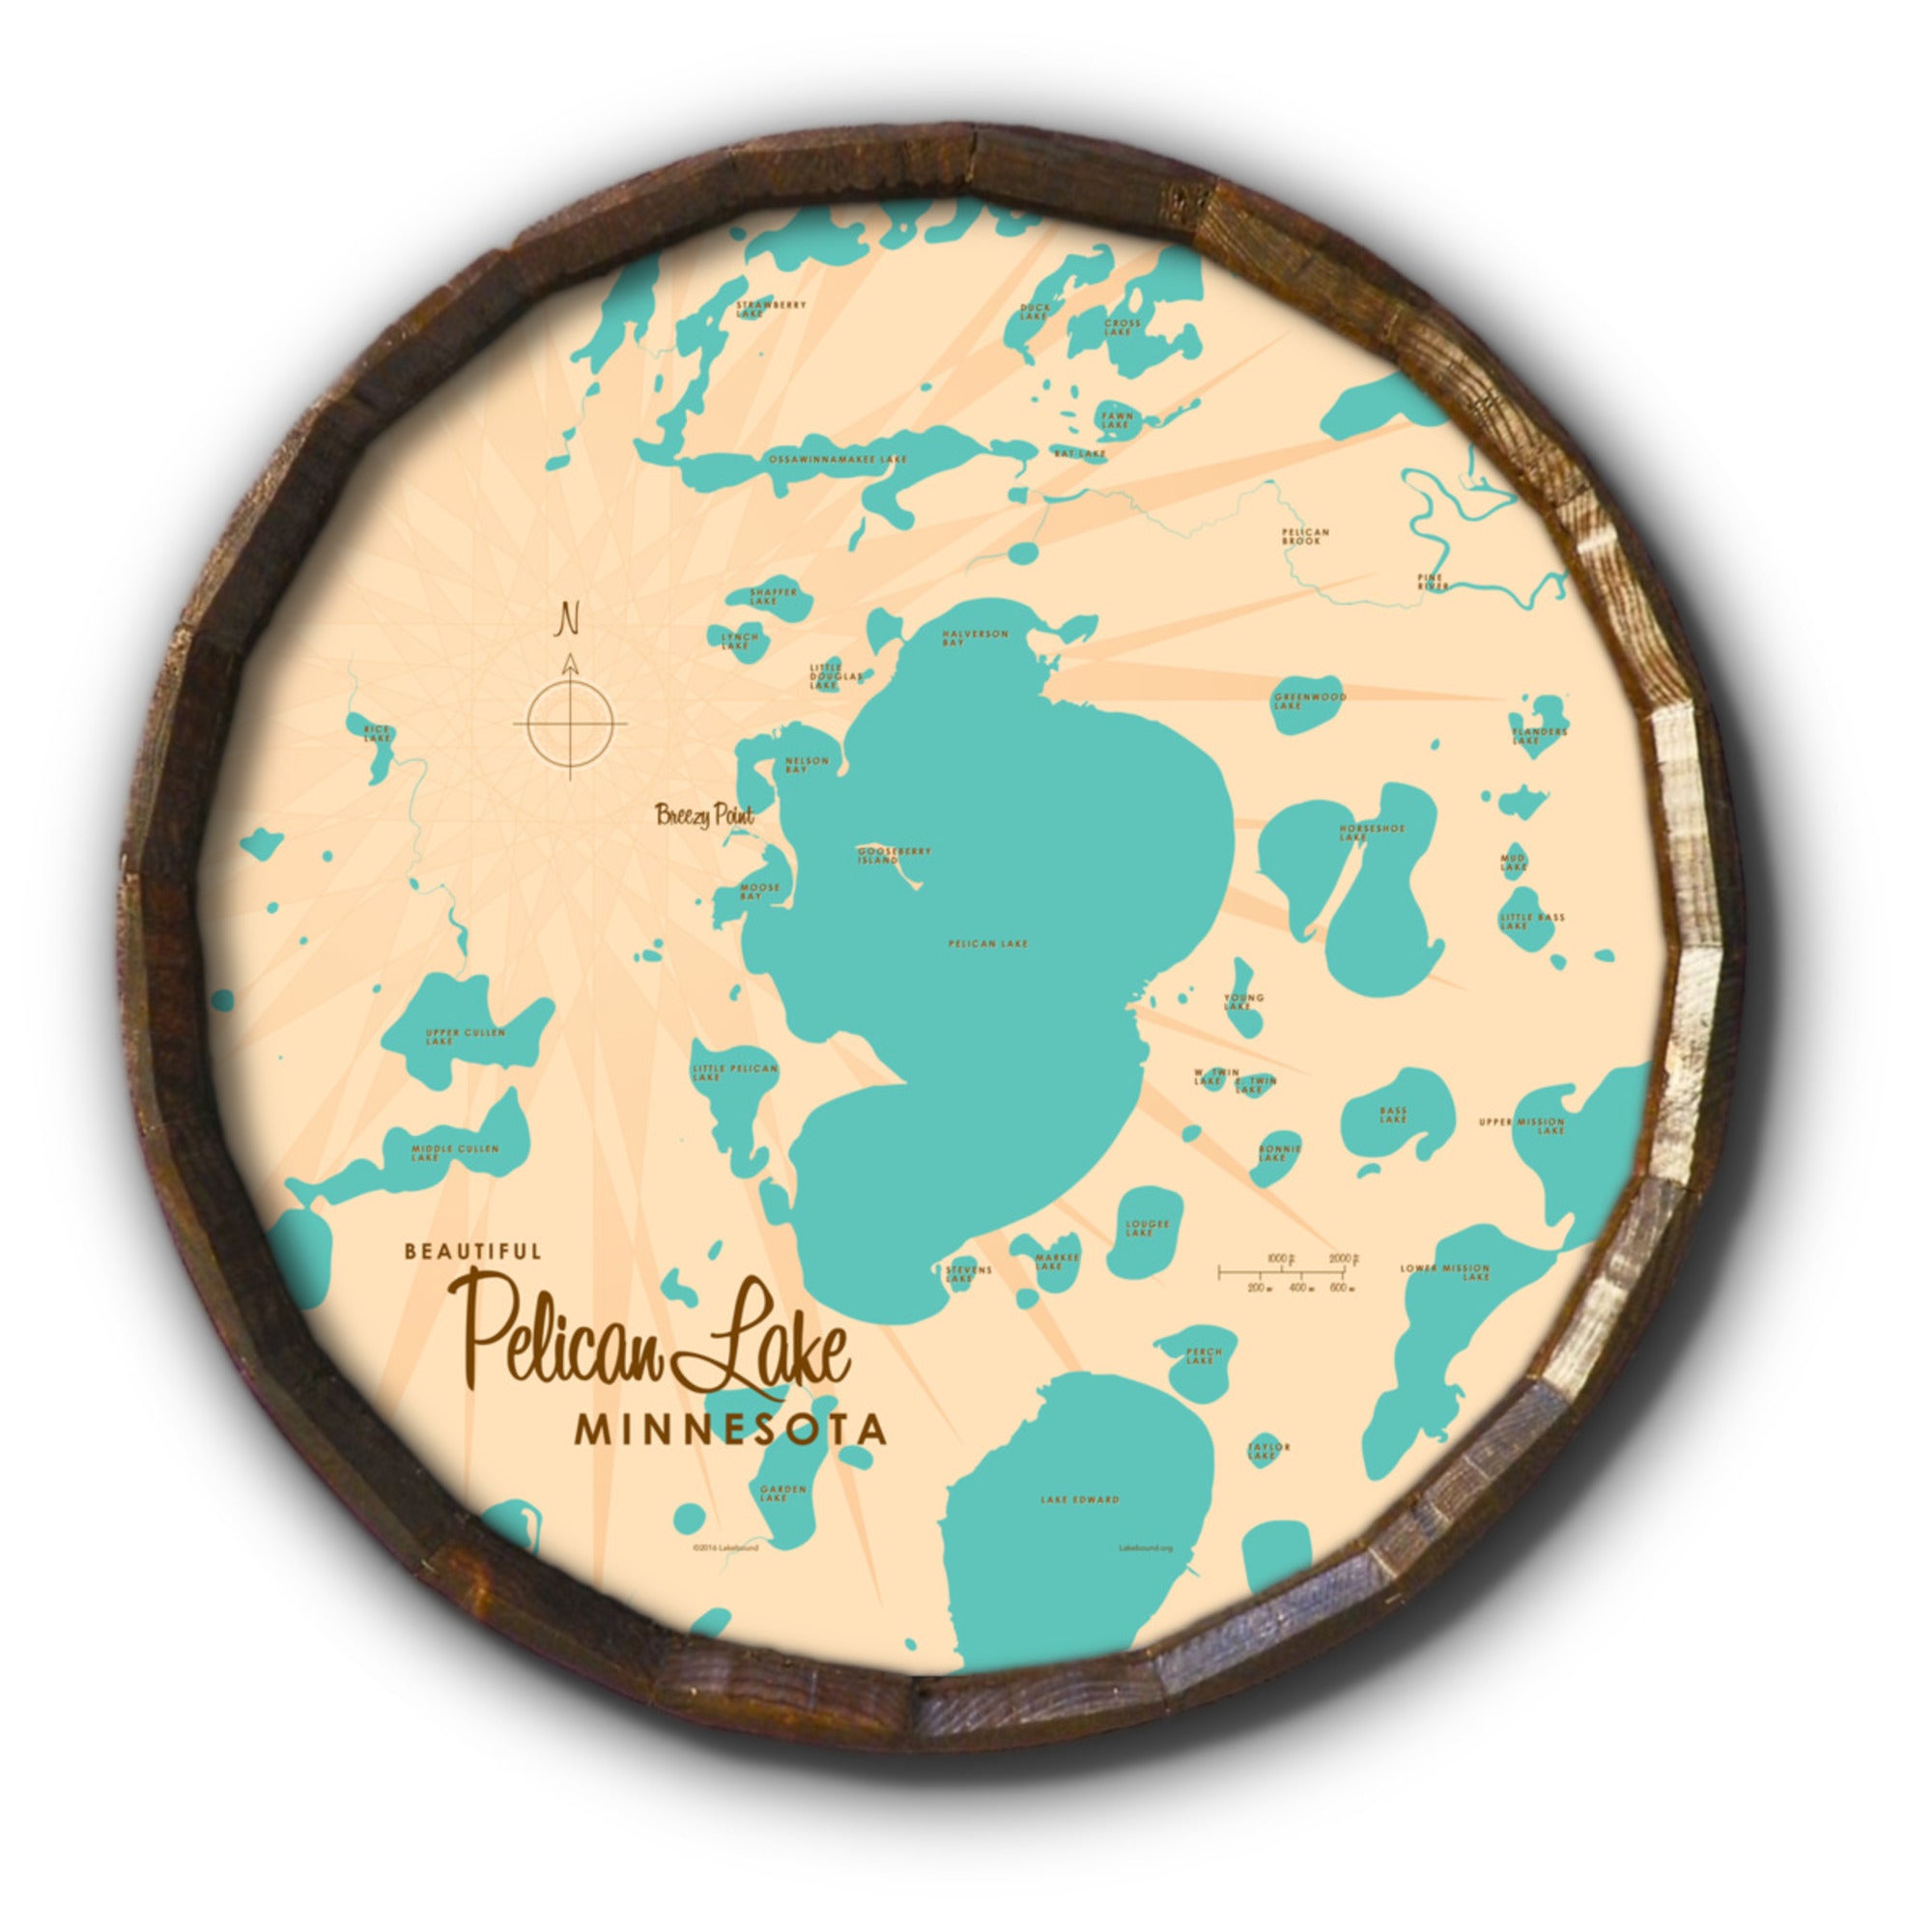 Pelican Lake Crow Wing County Minnesota, Barrel End Map Art